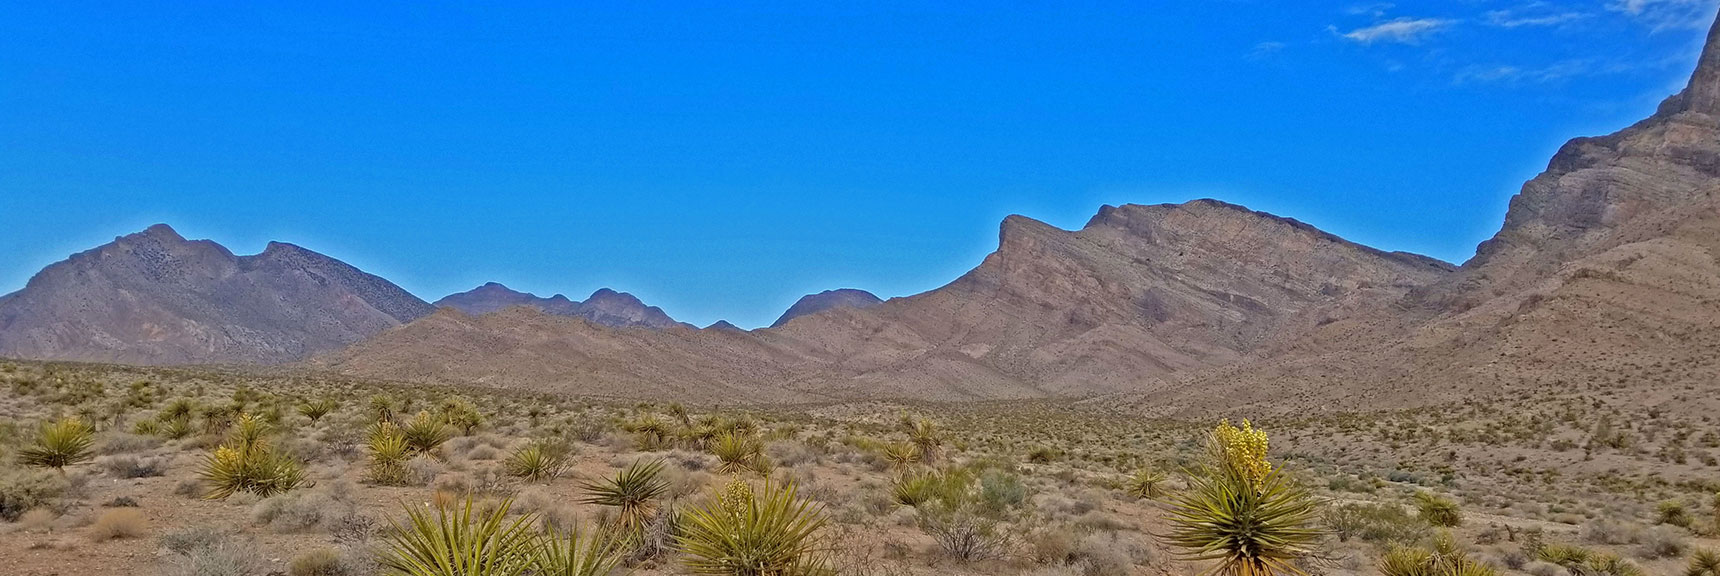 View West Toward Damsel Peak to Left. Little Red Rock at Base of Peak | Little Red Rock Las Vegas, Nevada, Near La Madre Mountains Wilderness